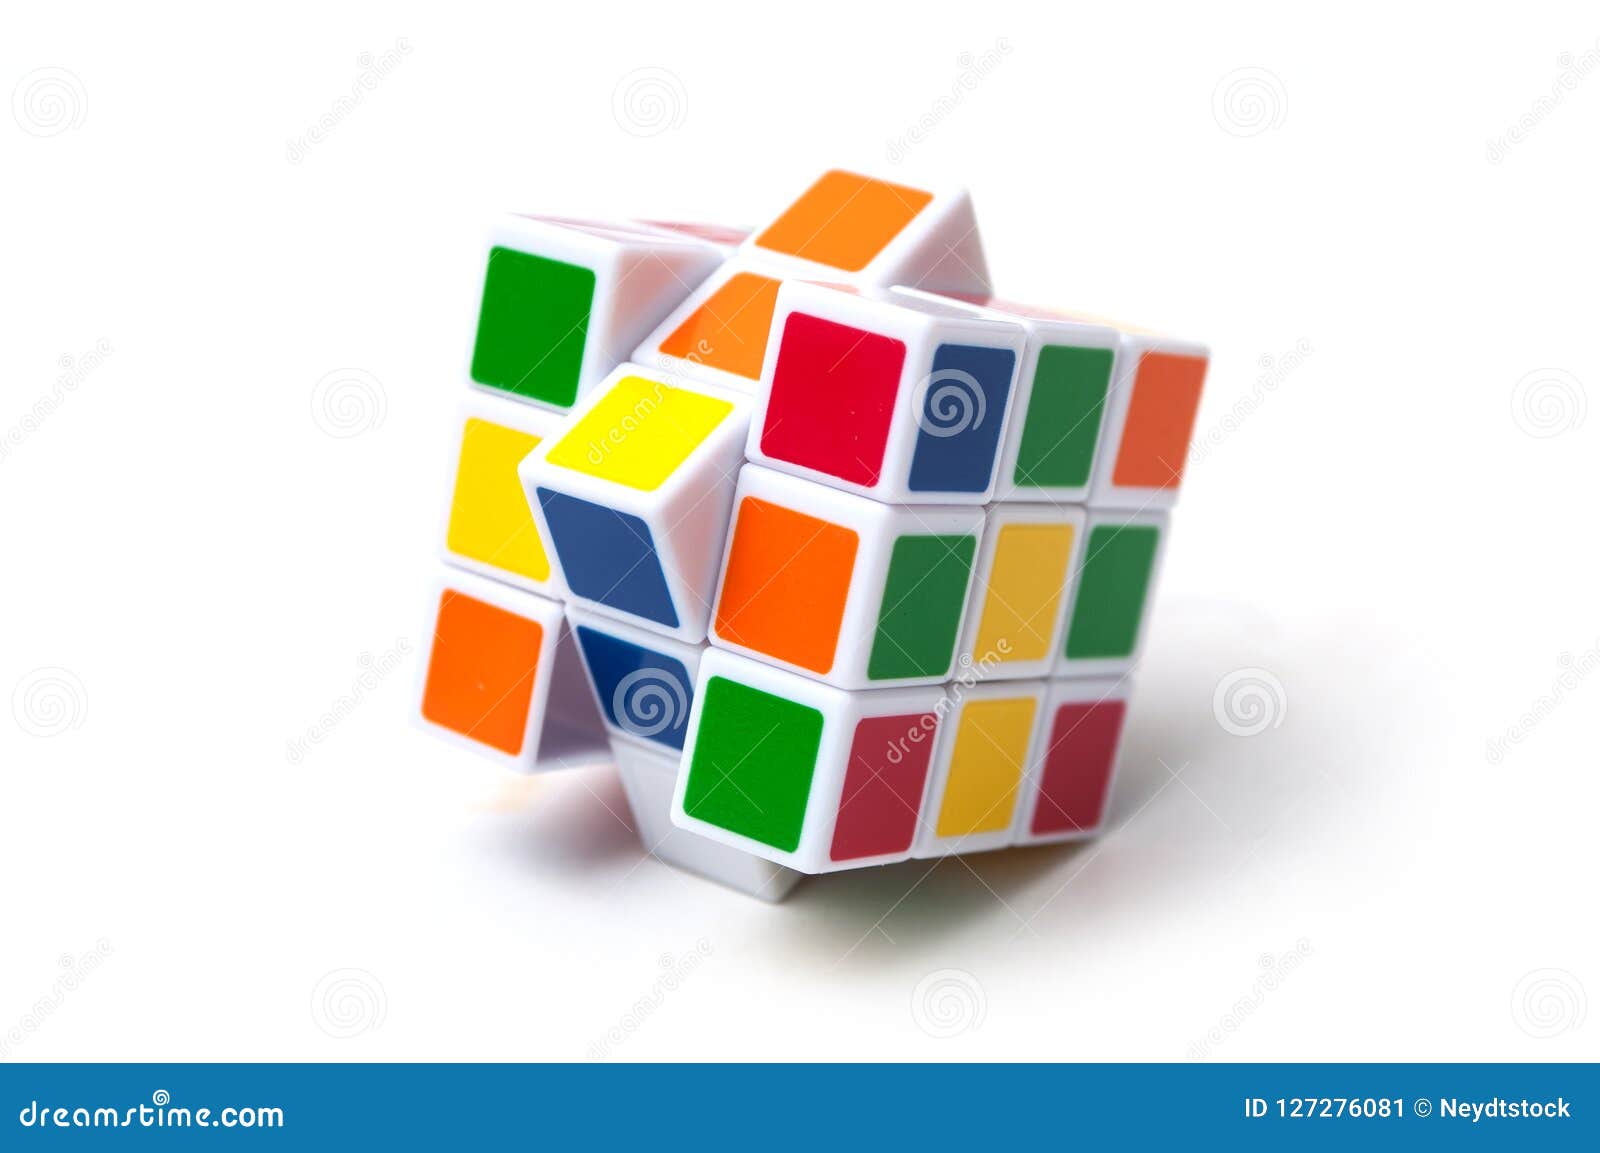 Rubik's Cube France